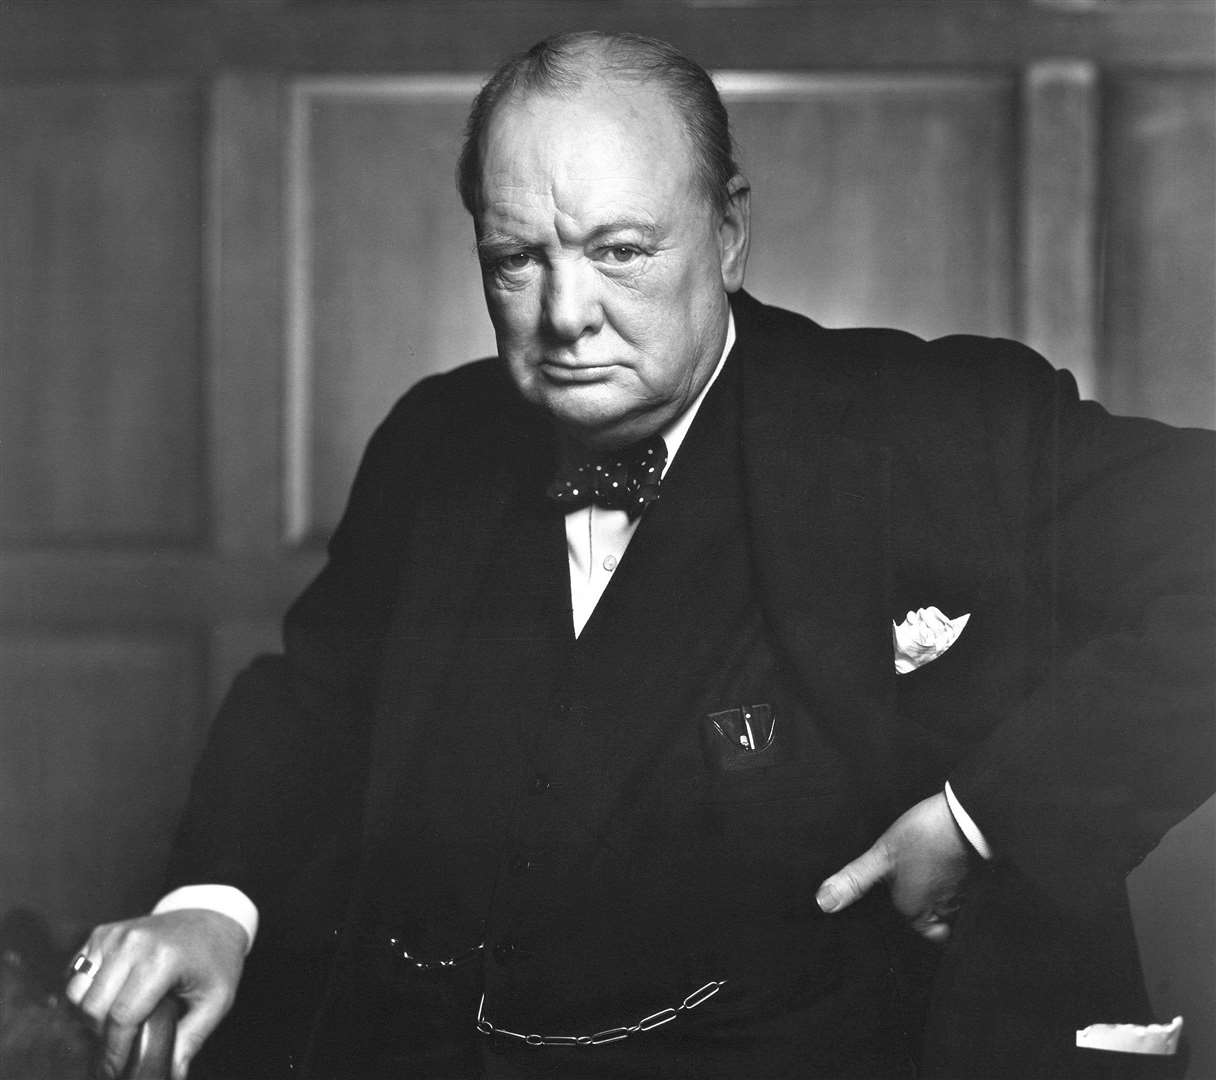 Winston Churchill loved painting